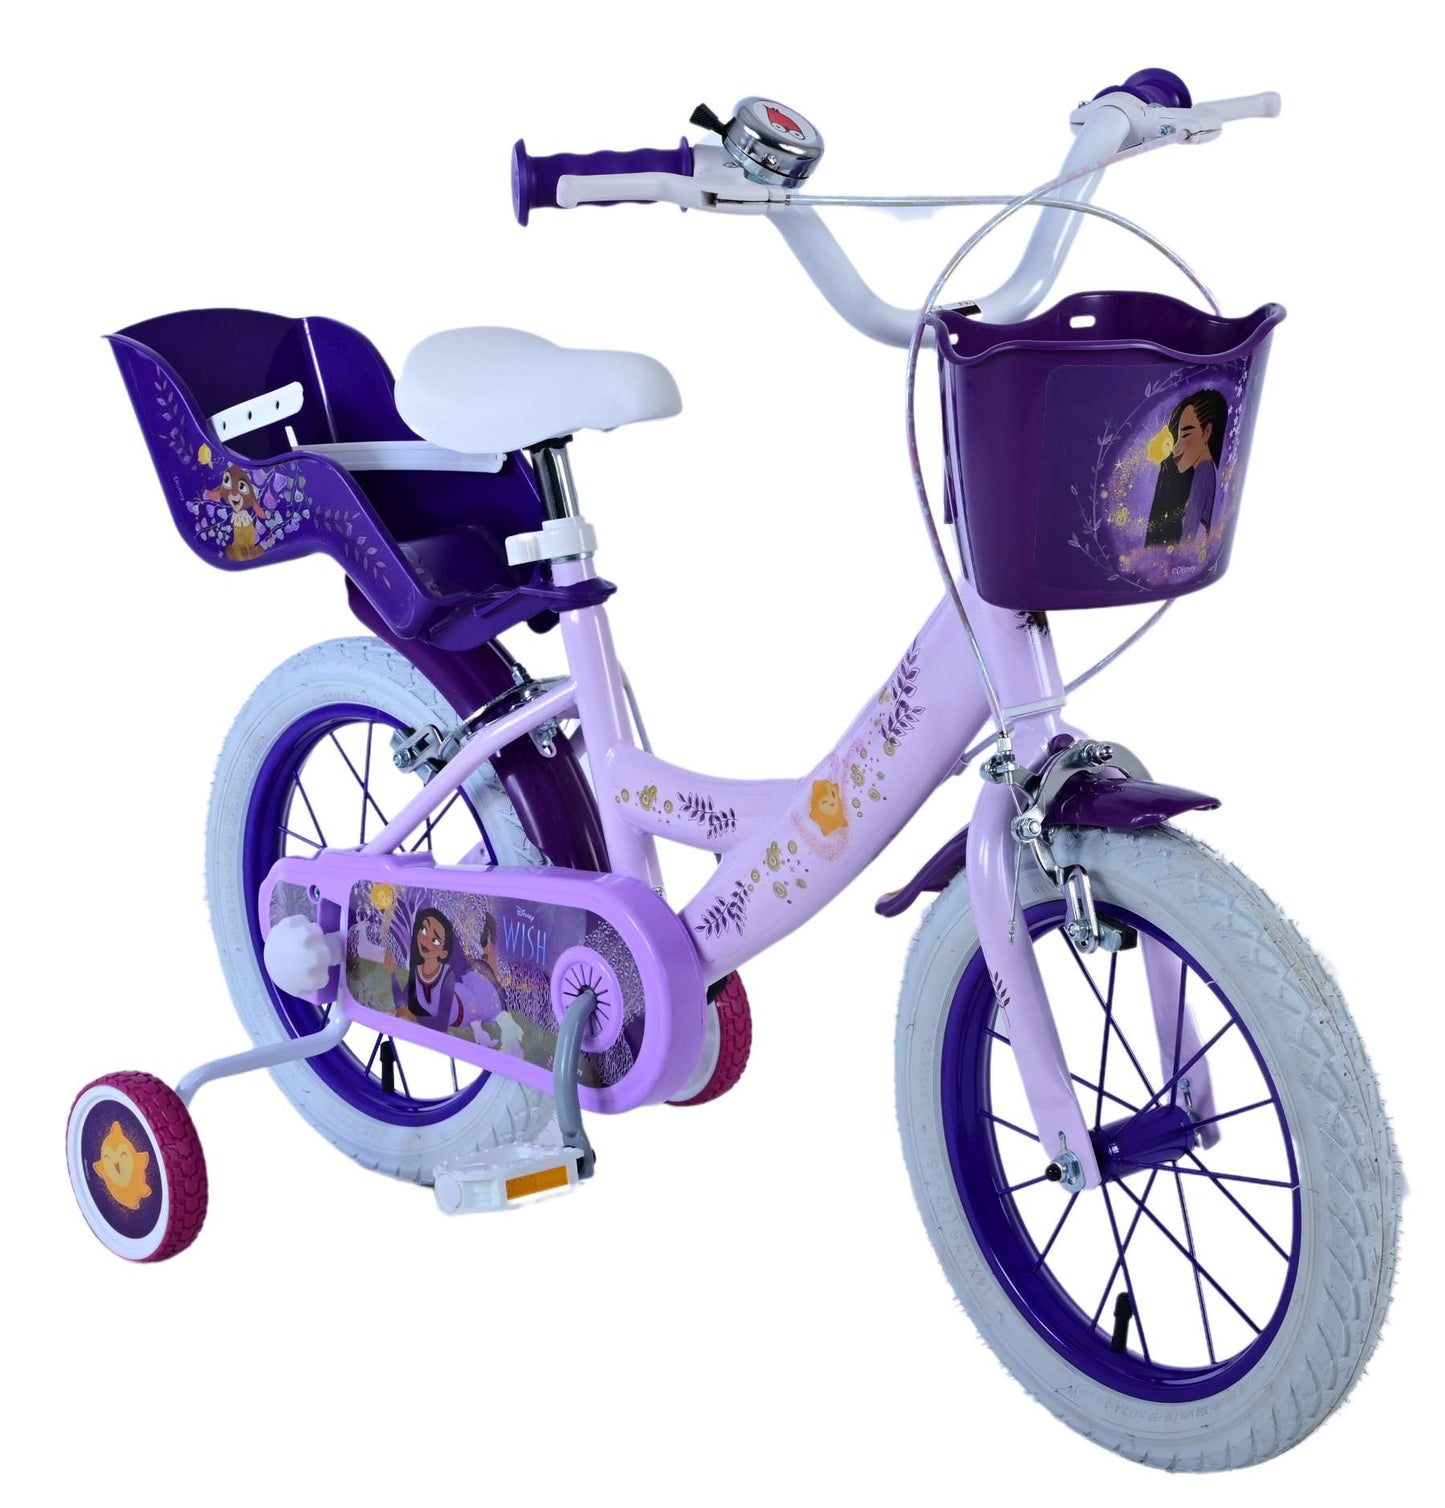 Wish Wish Wish Children's Bike Girls da 14 pollici viola due freni a mano